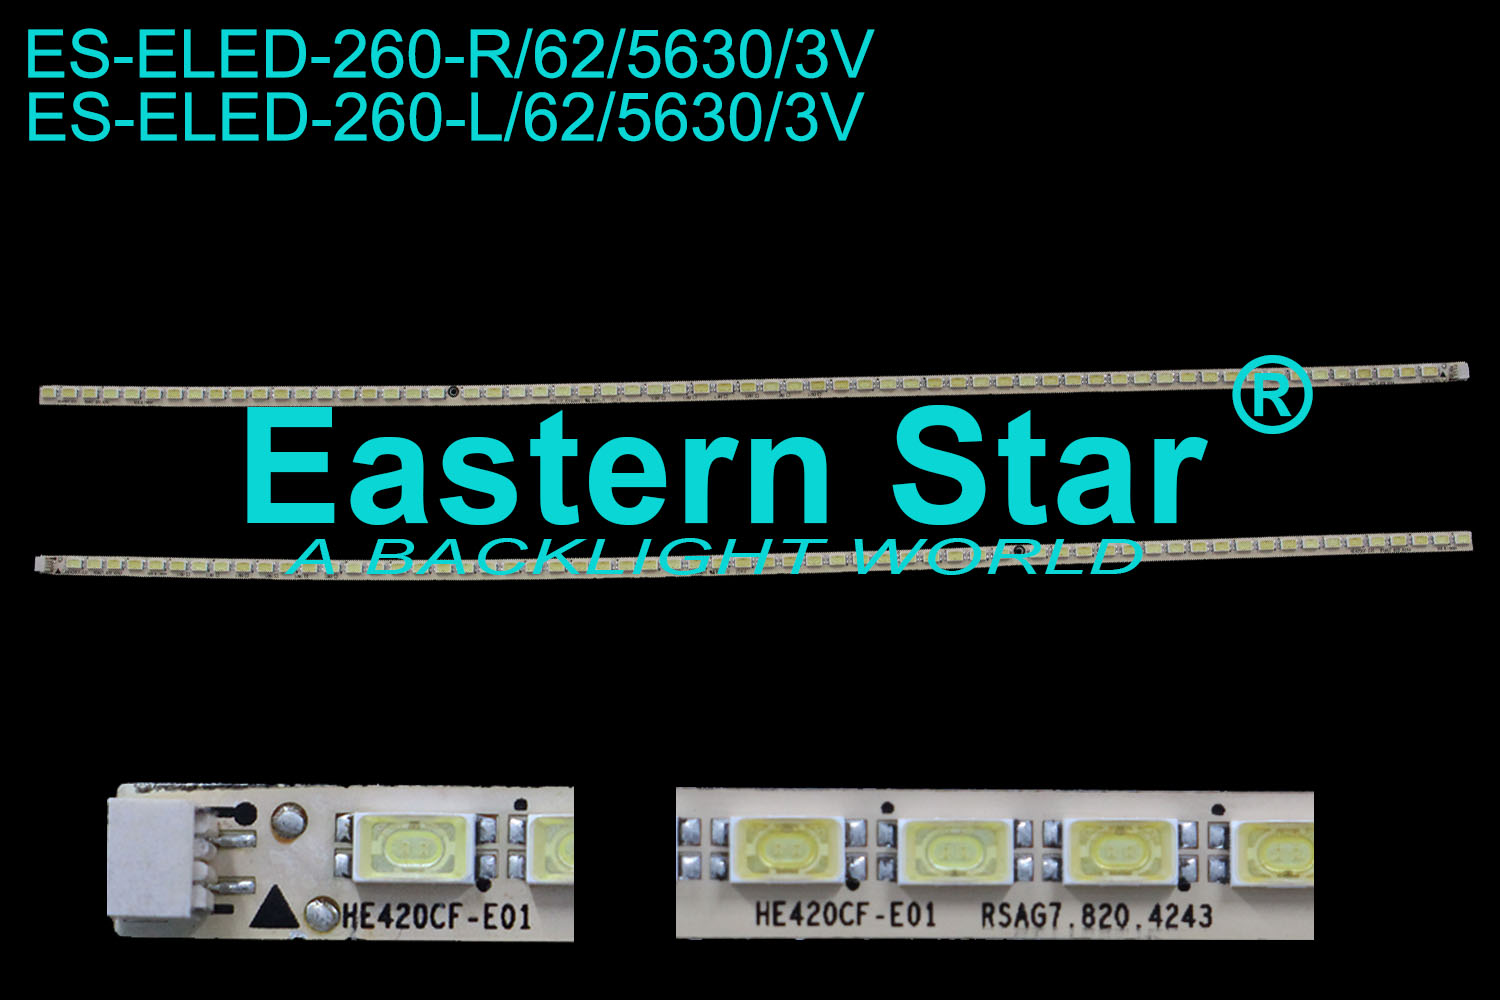 ES-ELED-260 ELED/EDGE TV backlight 42'' 62LEDs use for Hisense HE420CF-E01 RSAG7.820.4243/RSAG7.820.4241 VER.B LED STRIPS(2)